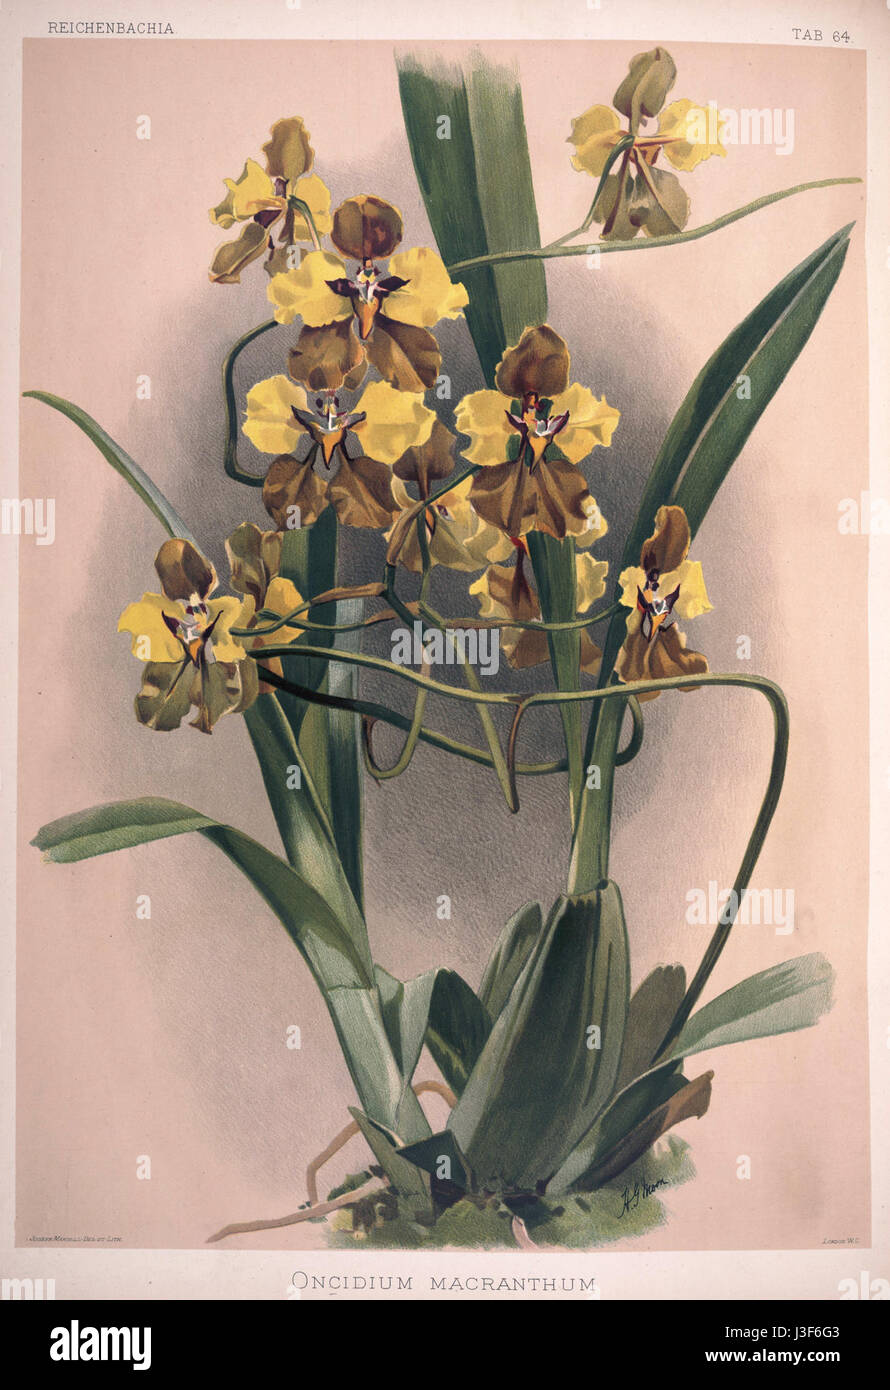 Frederick Sander   Reichenbachia II plate 64 (1890)   Oncidium macranthum Stock Photo